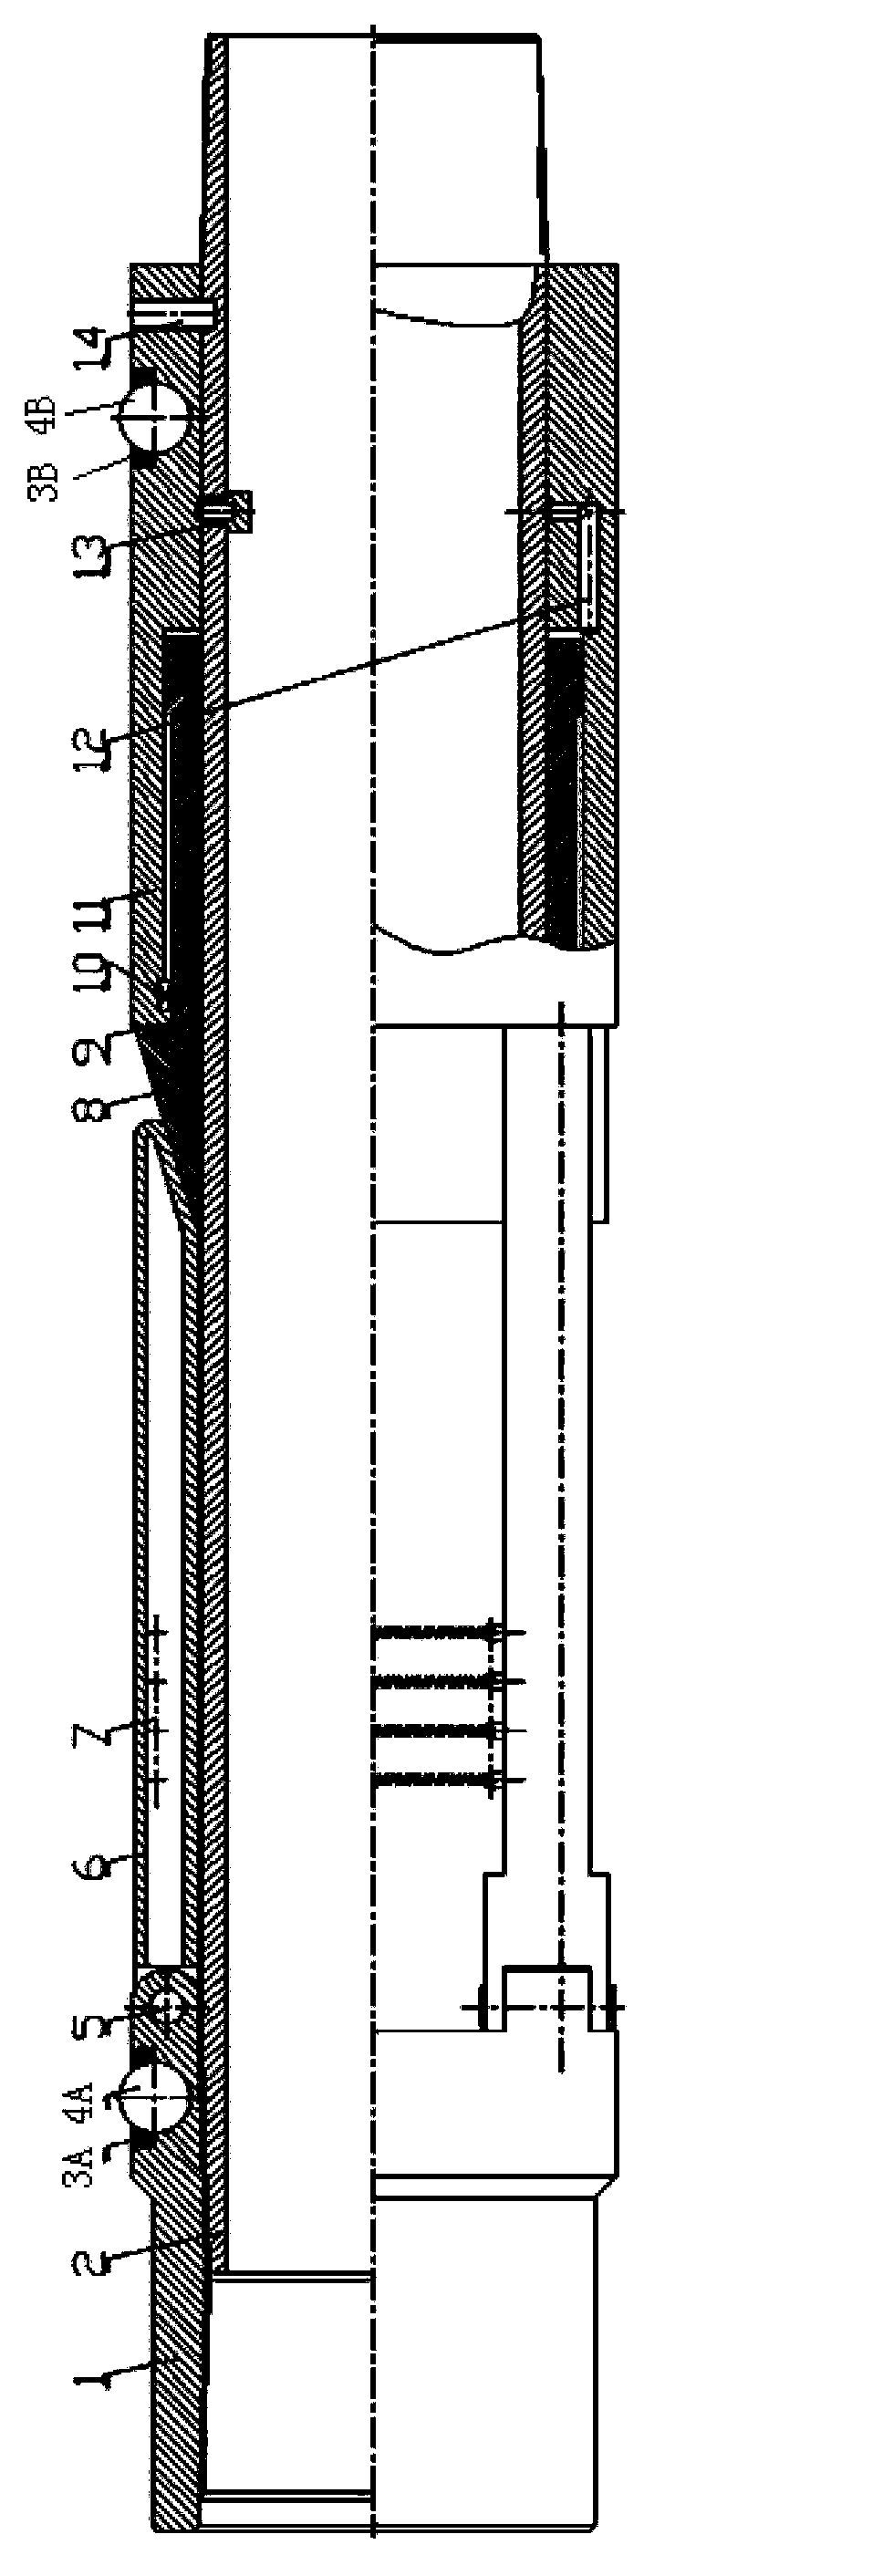 Hydraulic casing centralizer